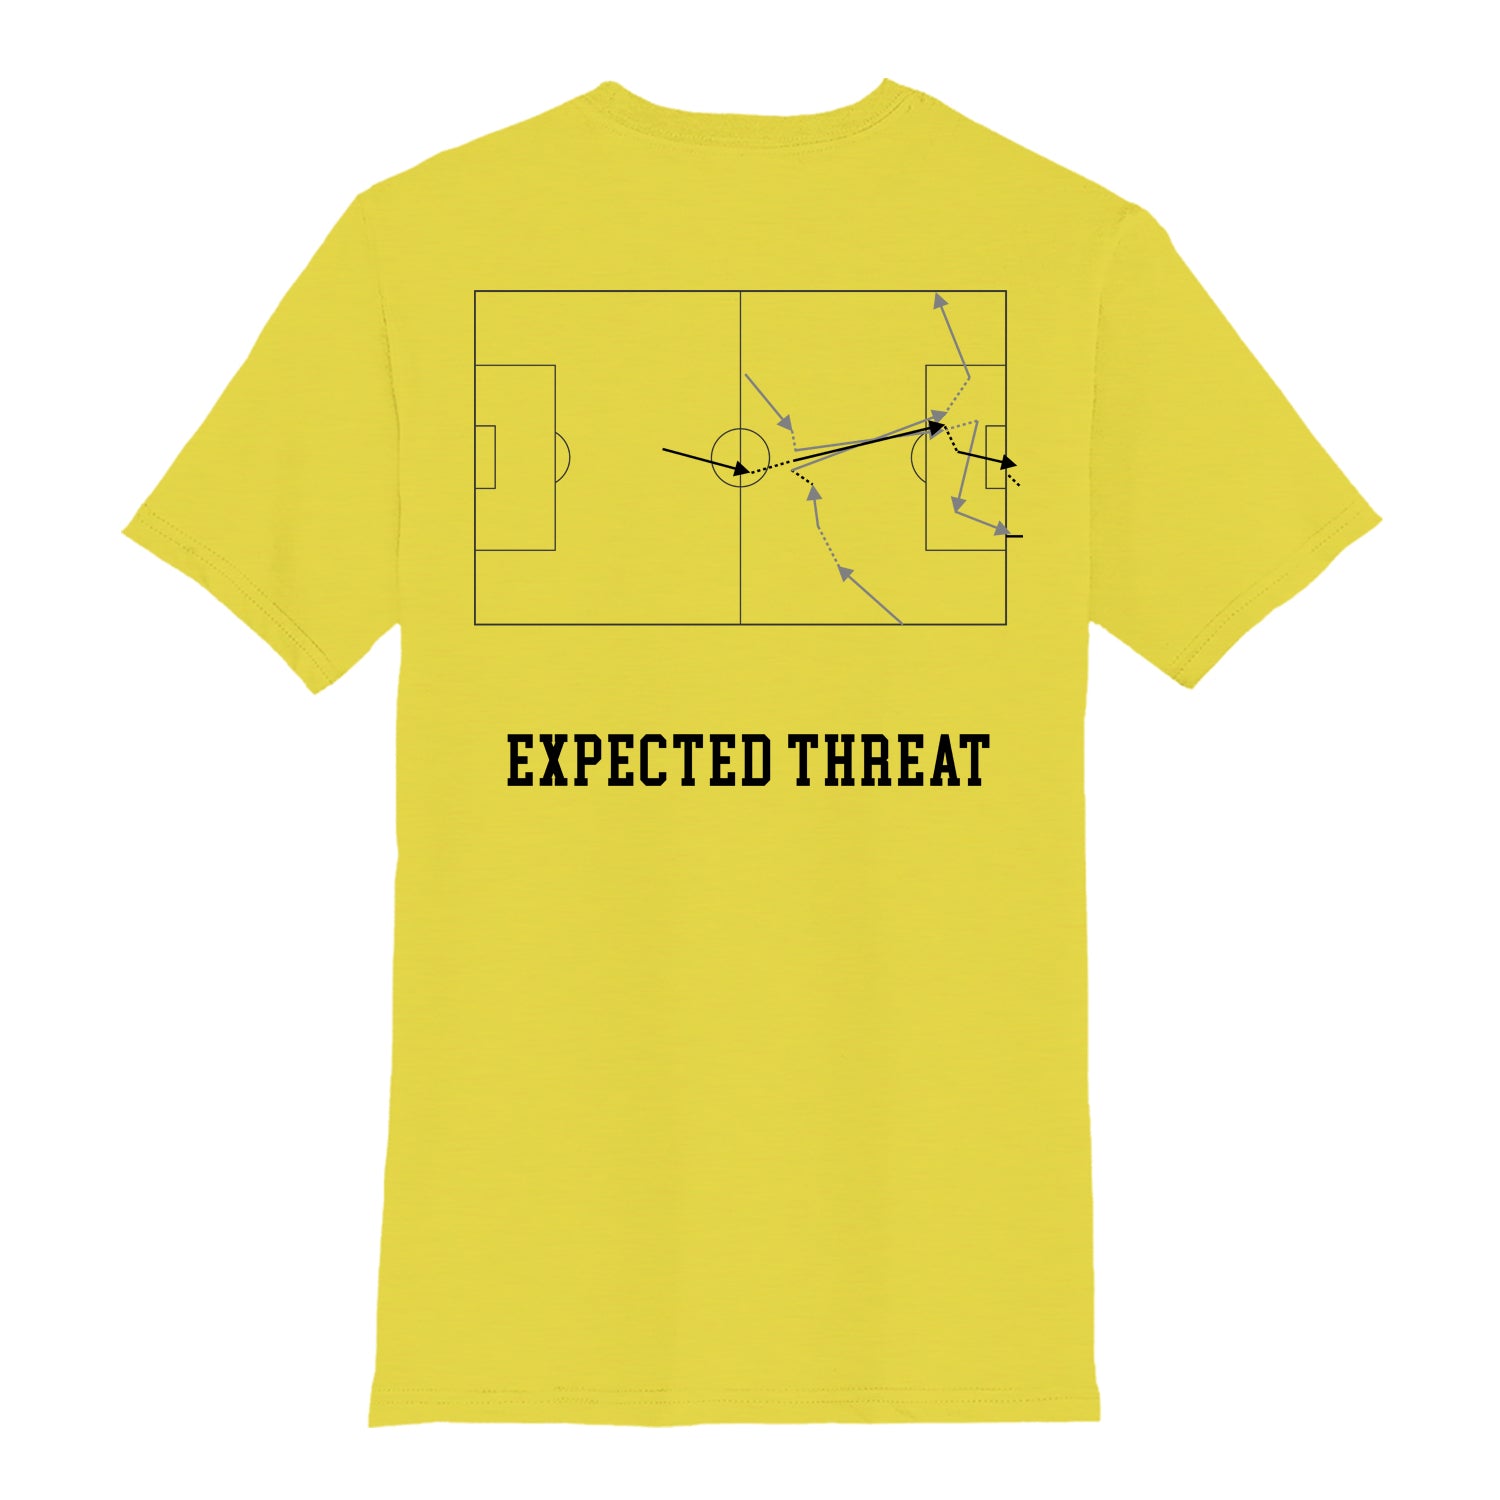 Expected Threat - Soccermatics - Tee